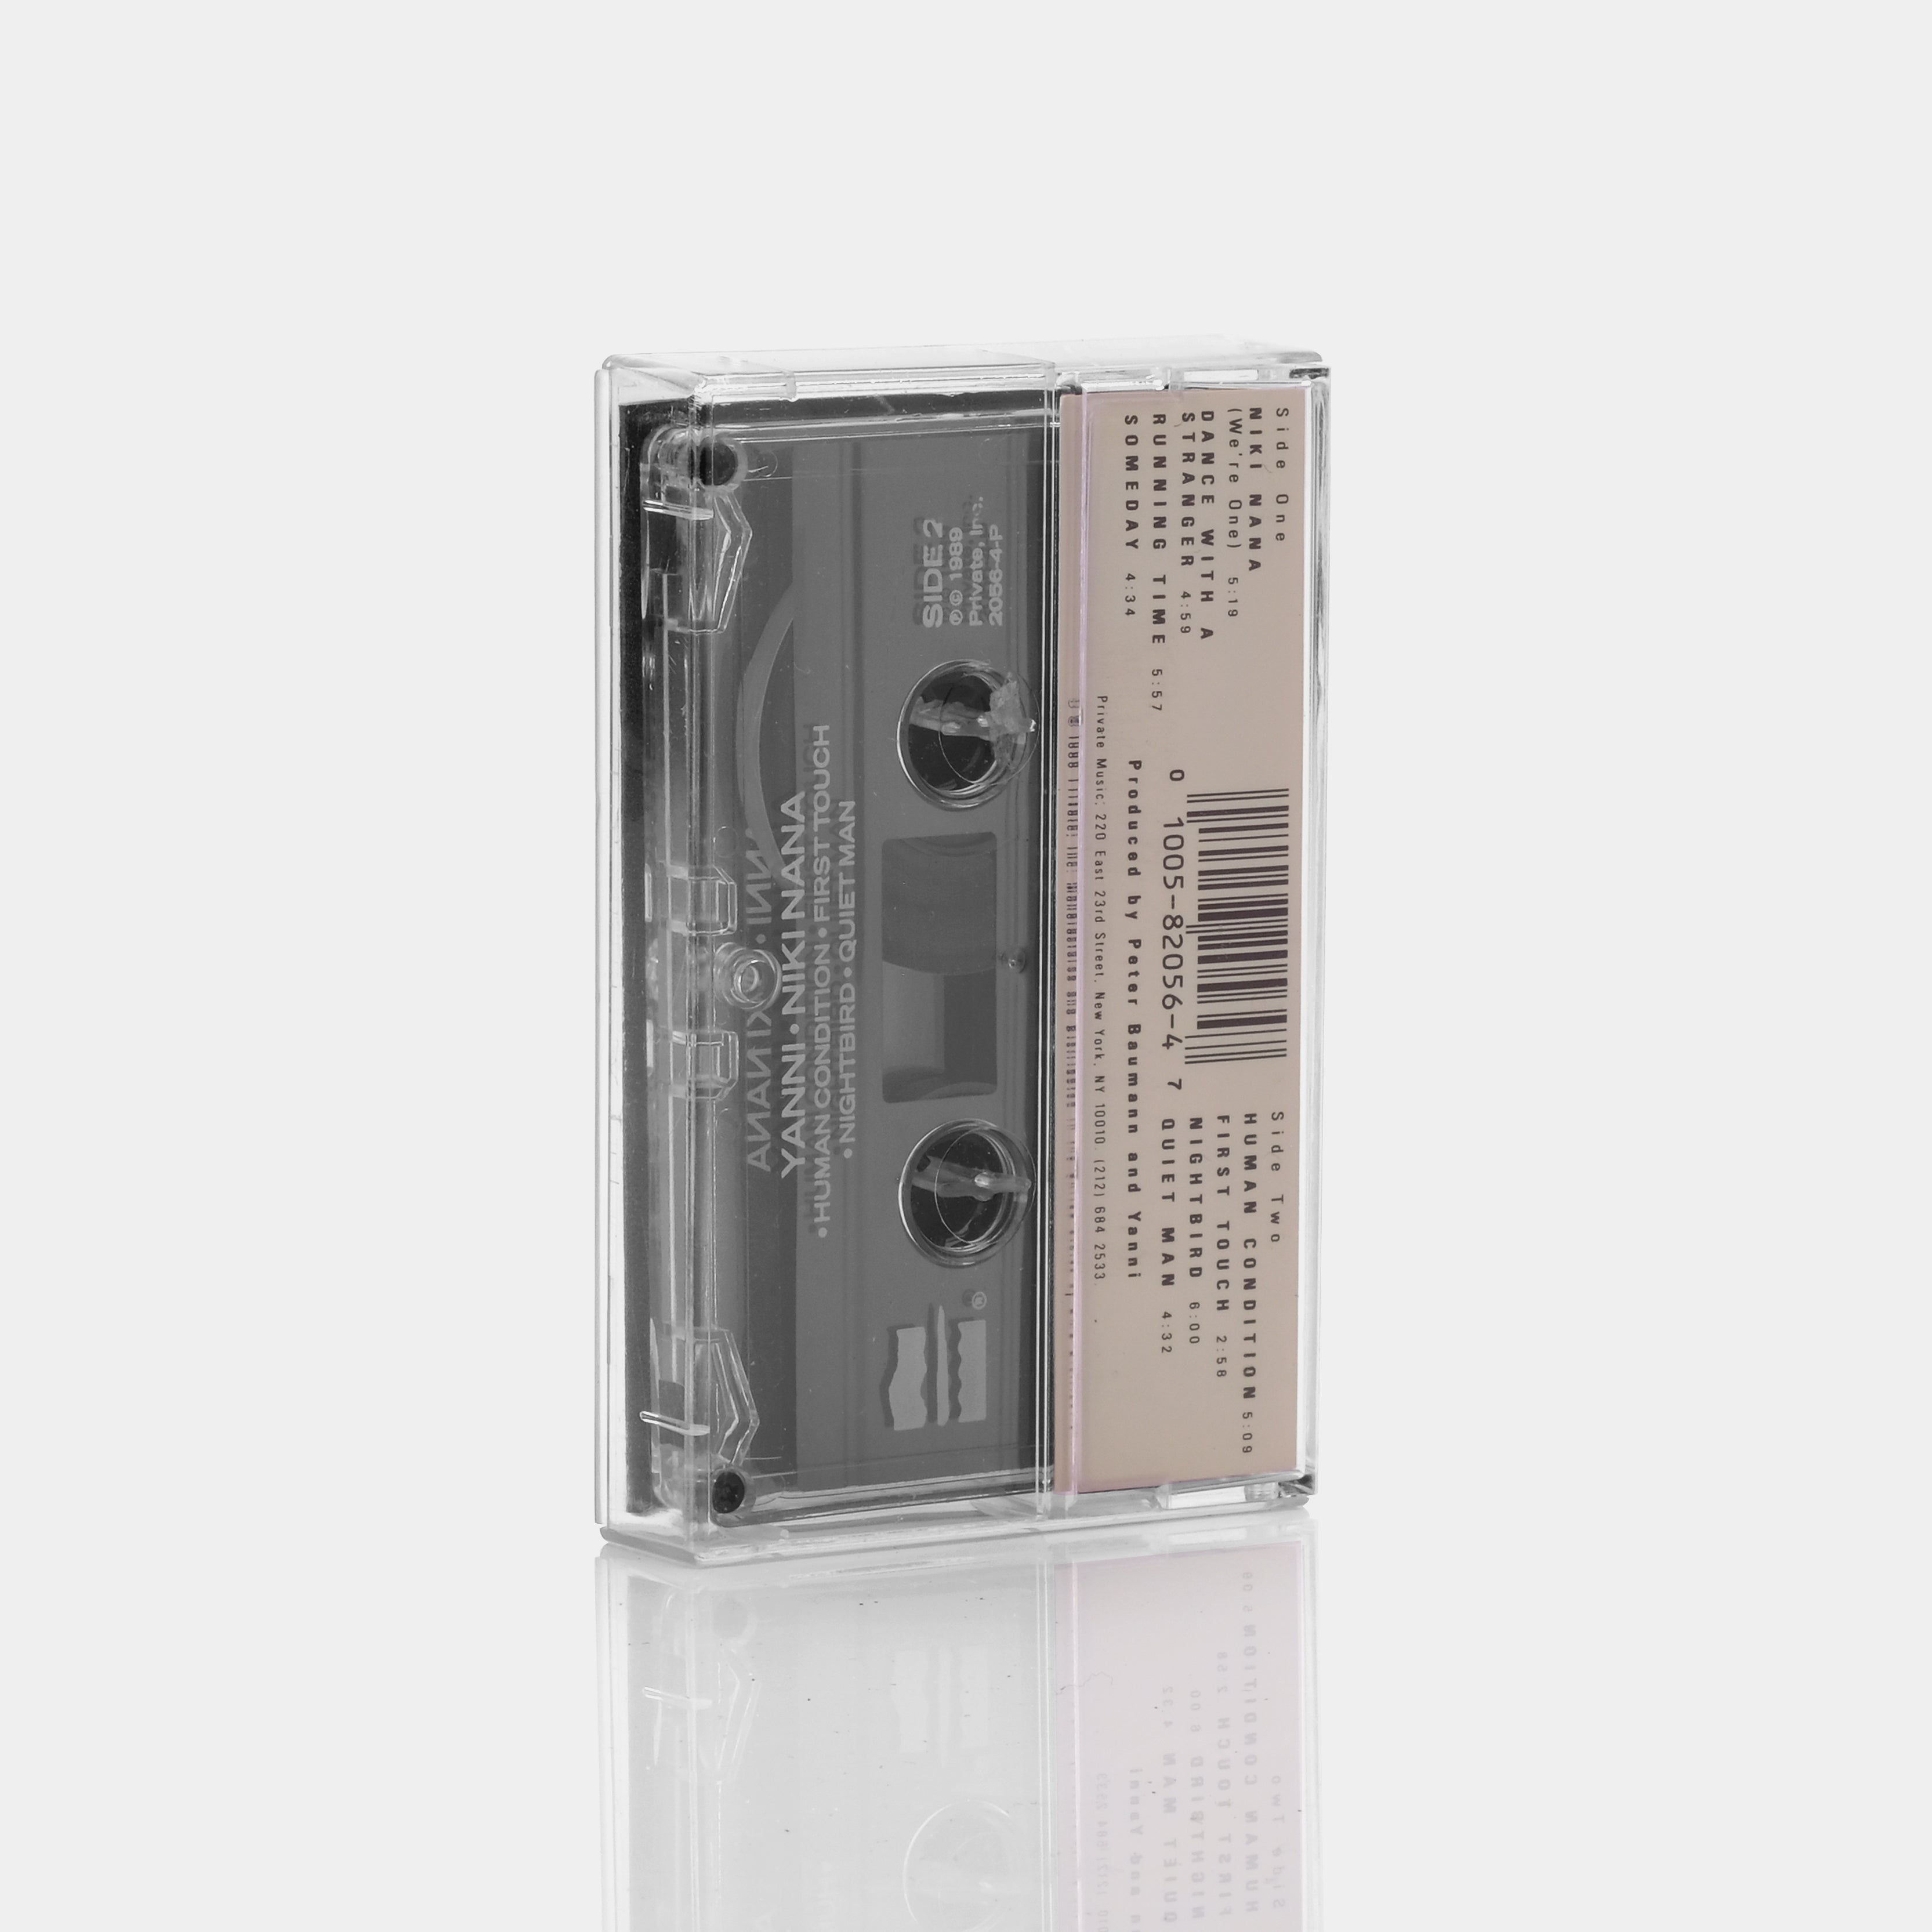 Yanni - Niki Nana Cassette Tape